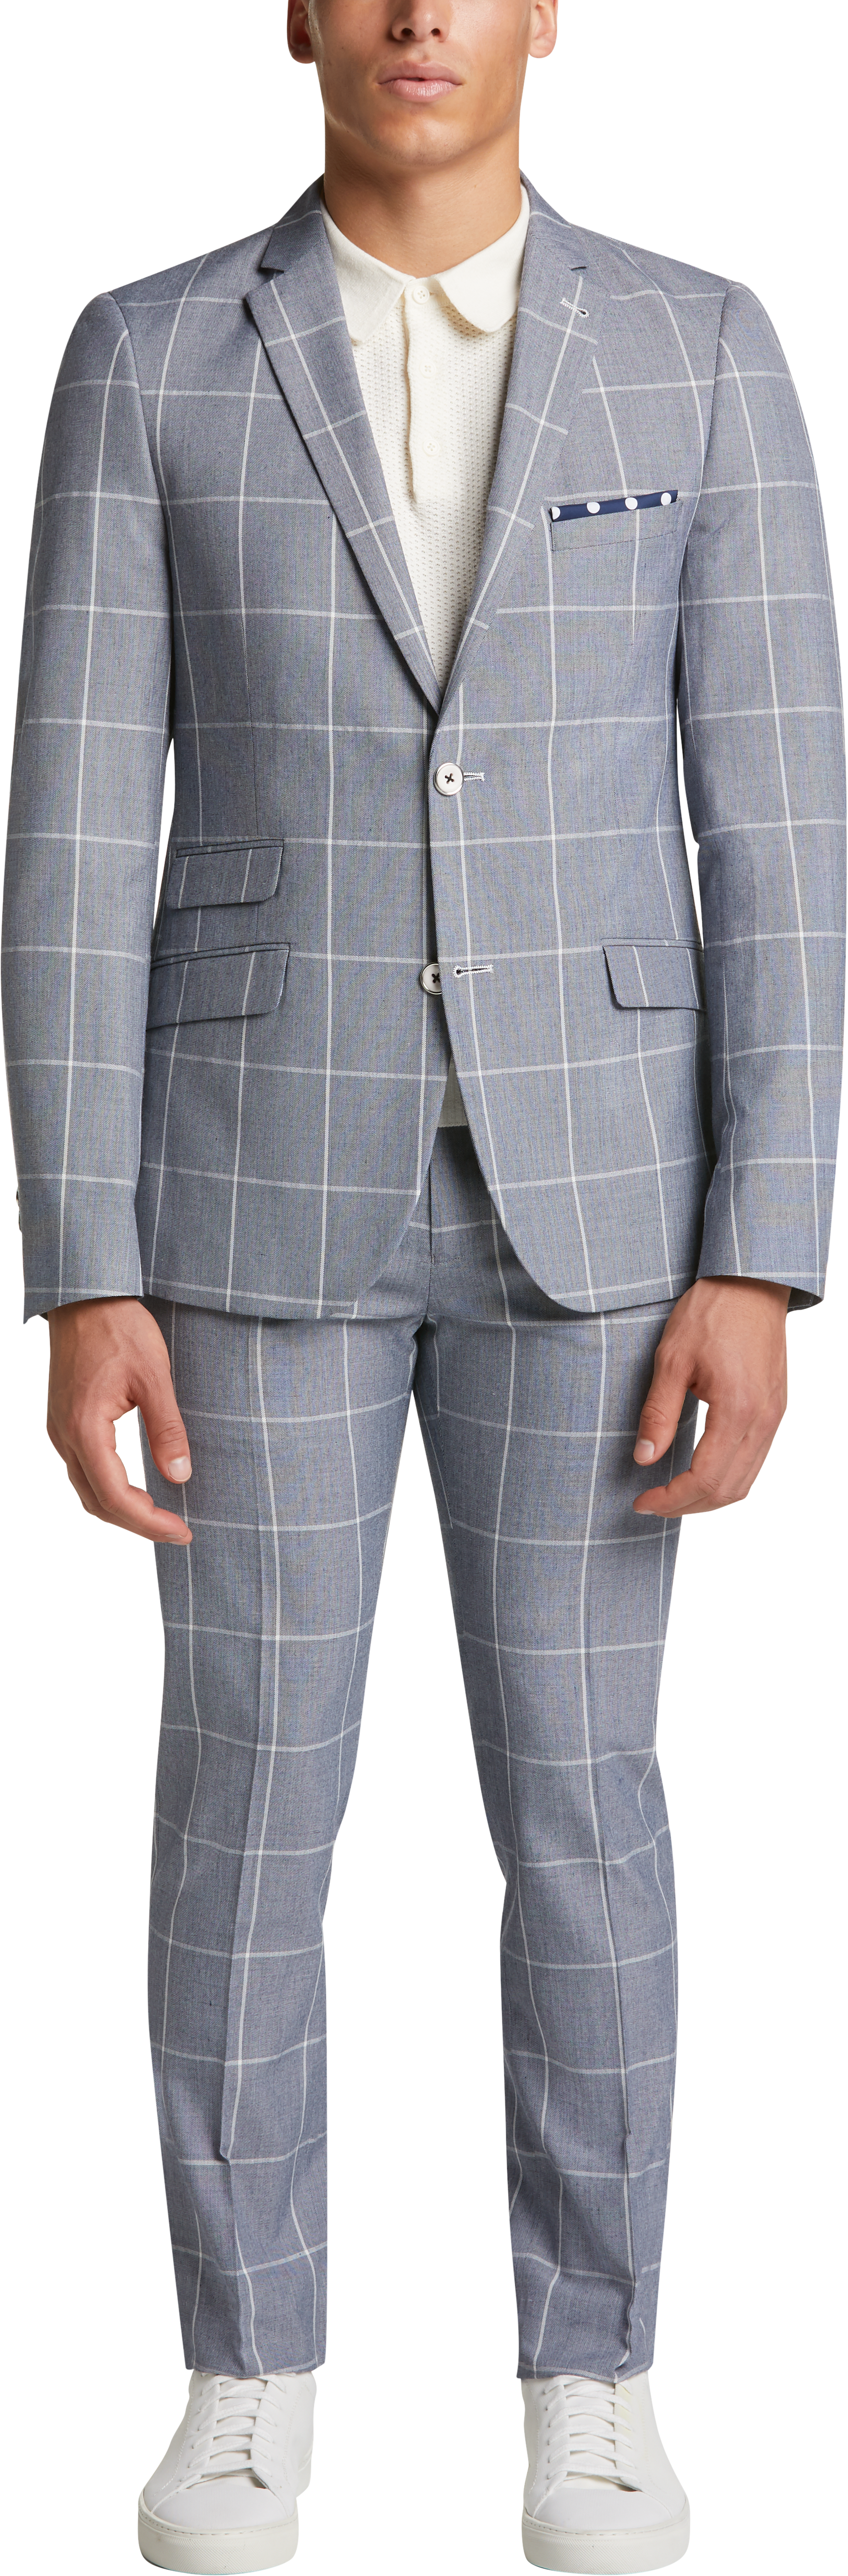 Paisley & Gray Slim Fit Suit Separates Coat, Gray Denim Windowpane ...